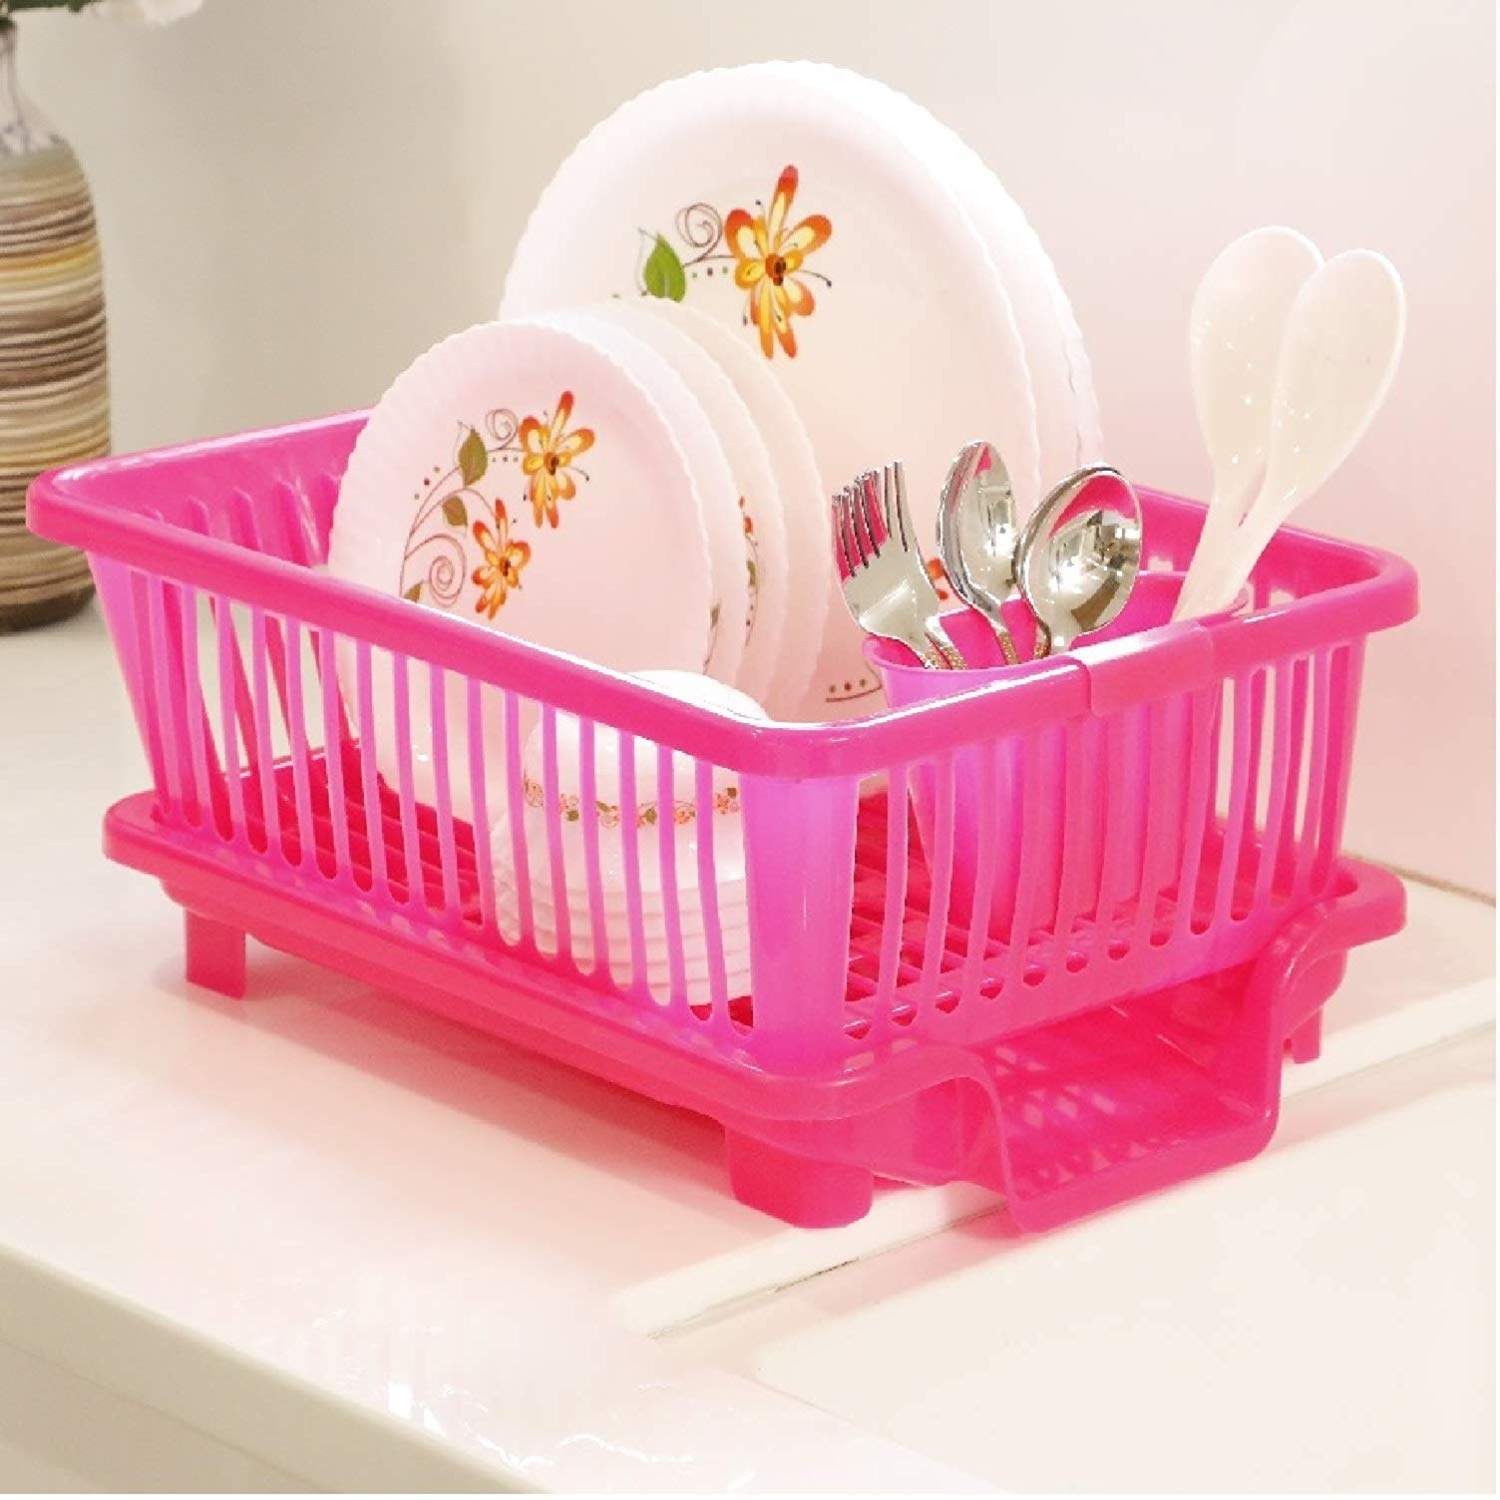 A pink dish drying rack